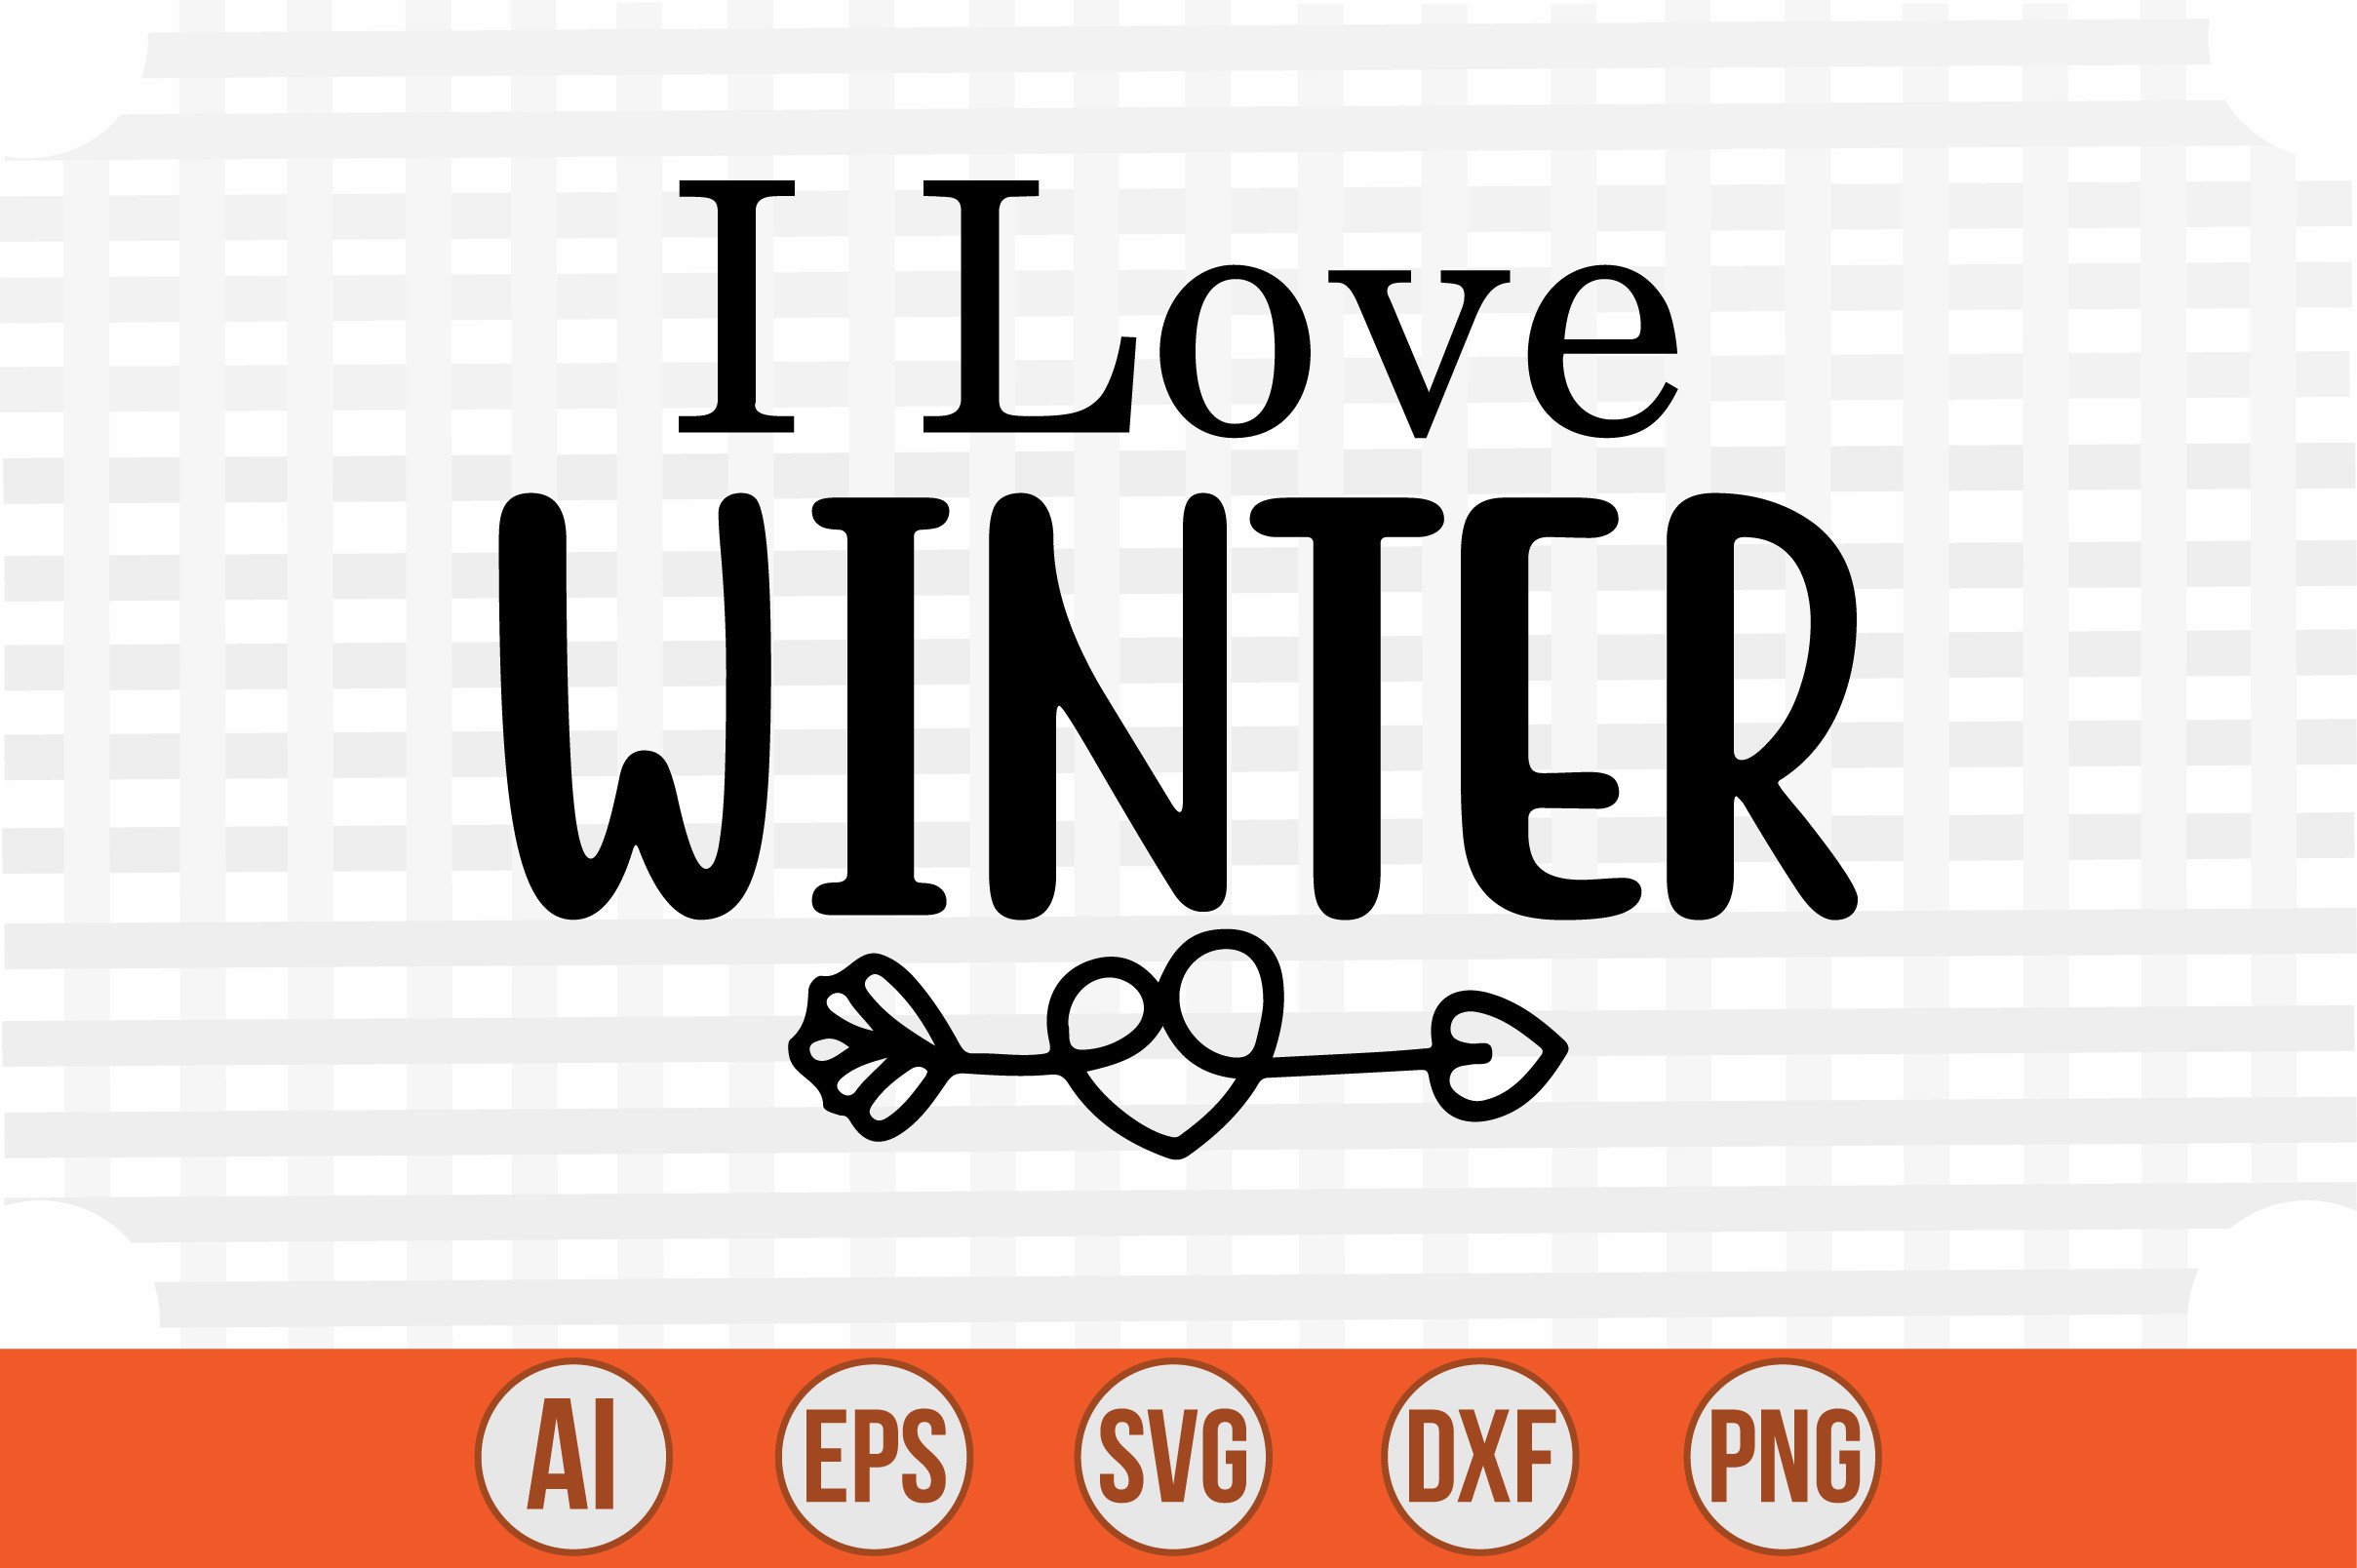 I Love Winter Digital Stickers Graphic by Miztli · Creative Fabrica